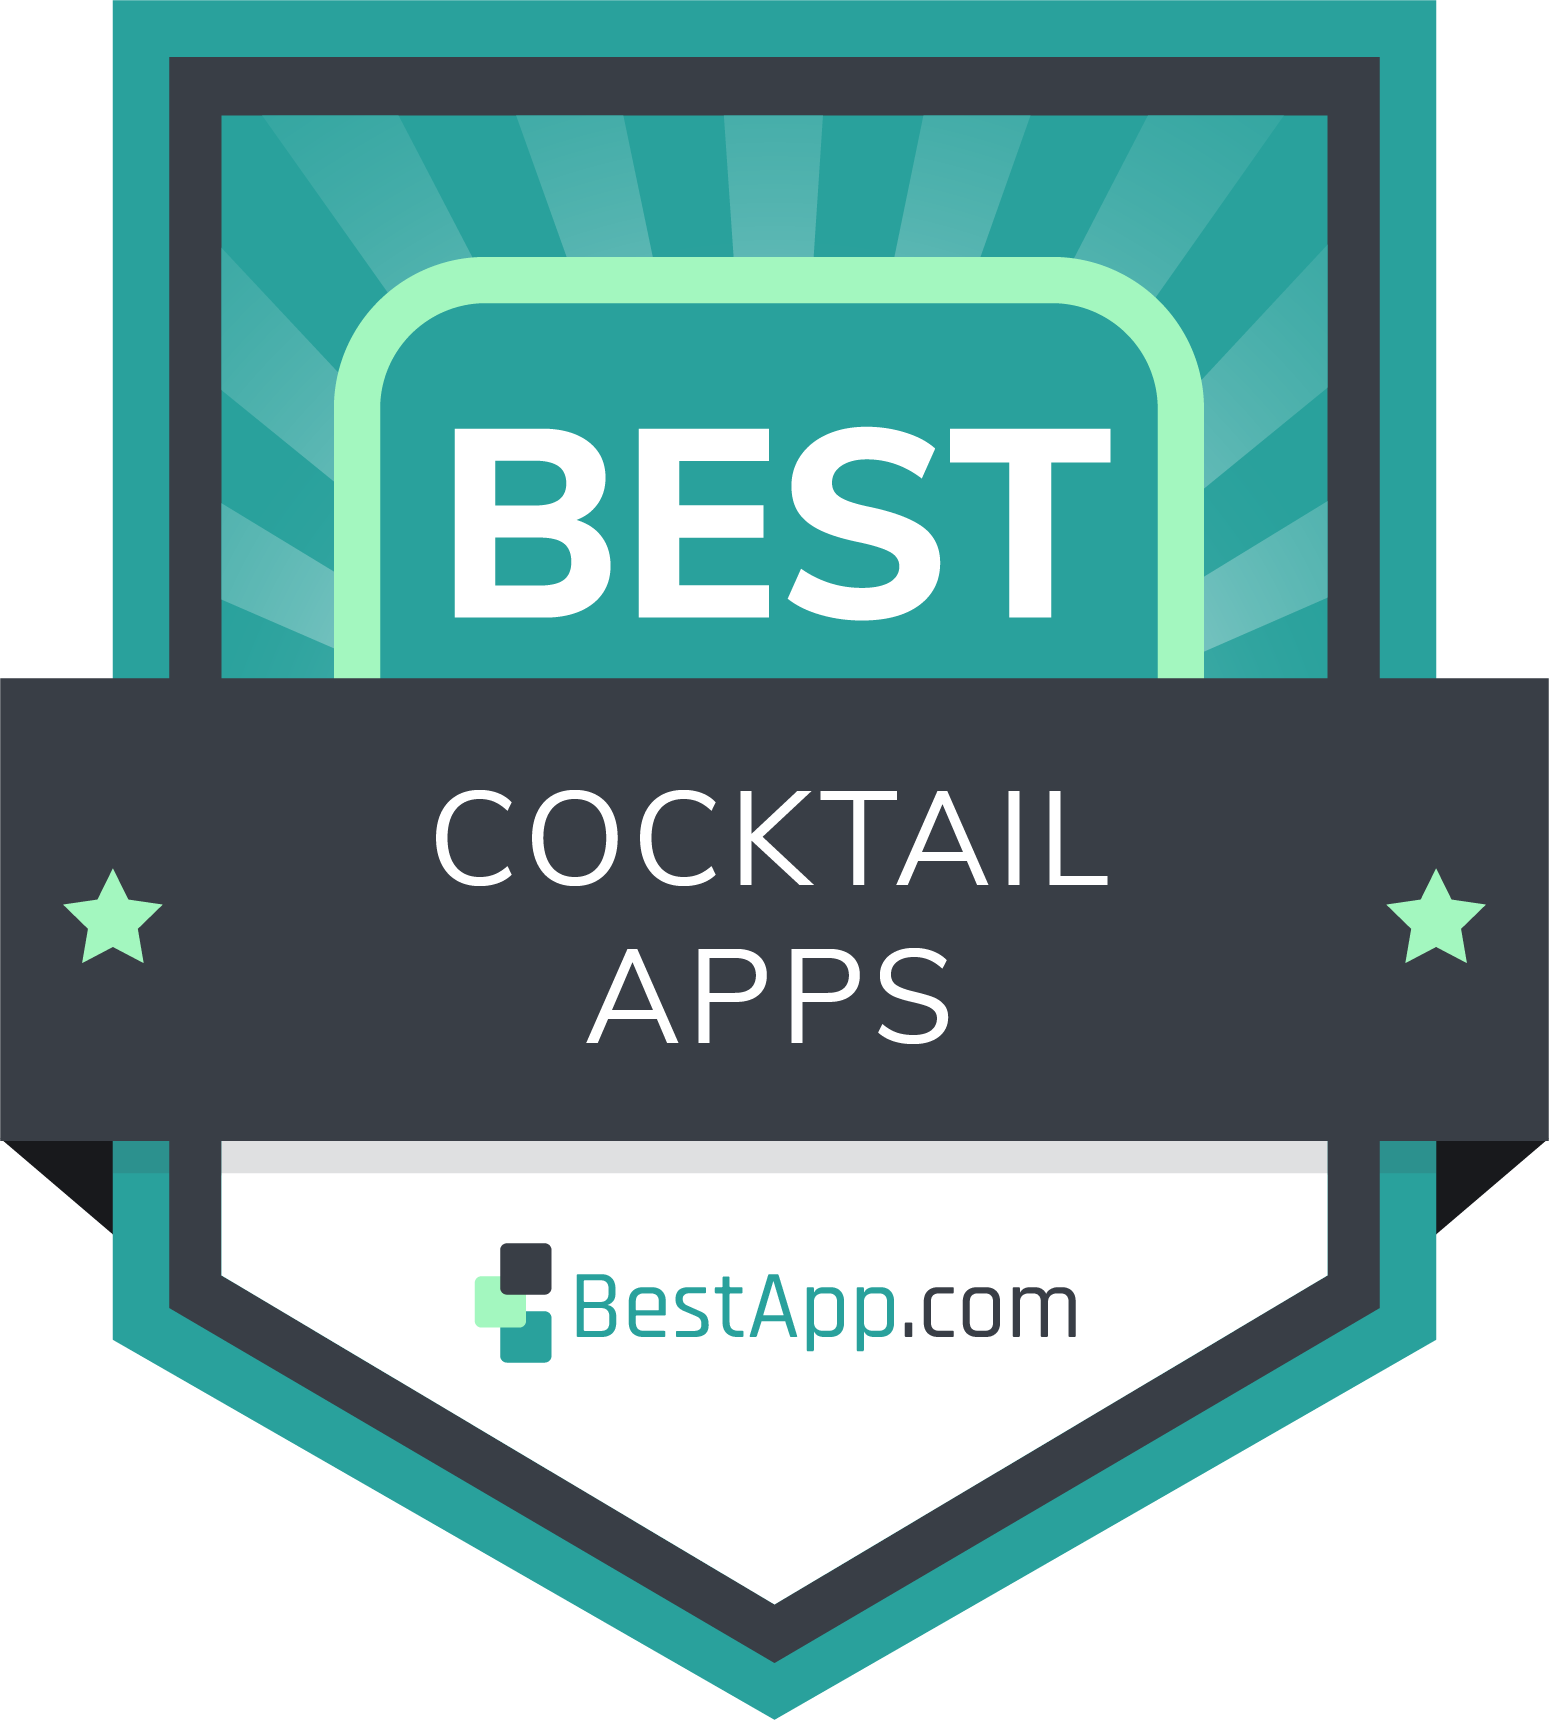 Best Cocktail Apps Badge